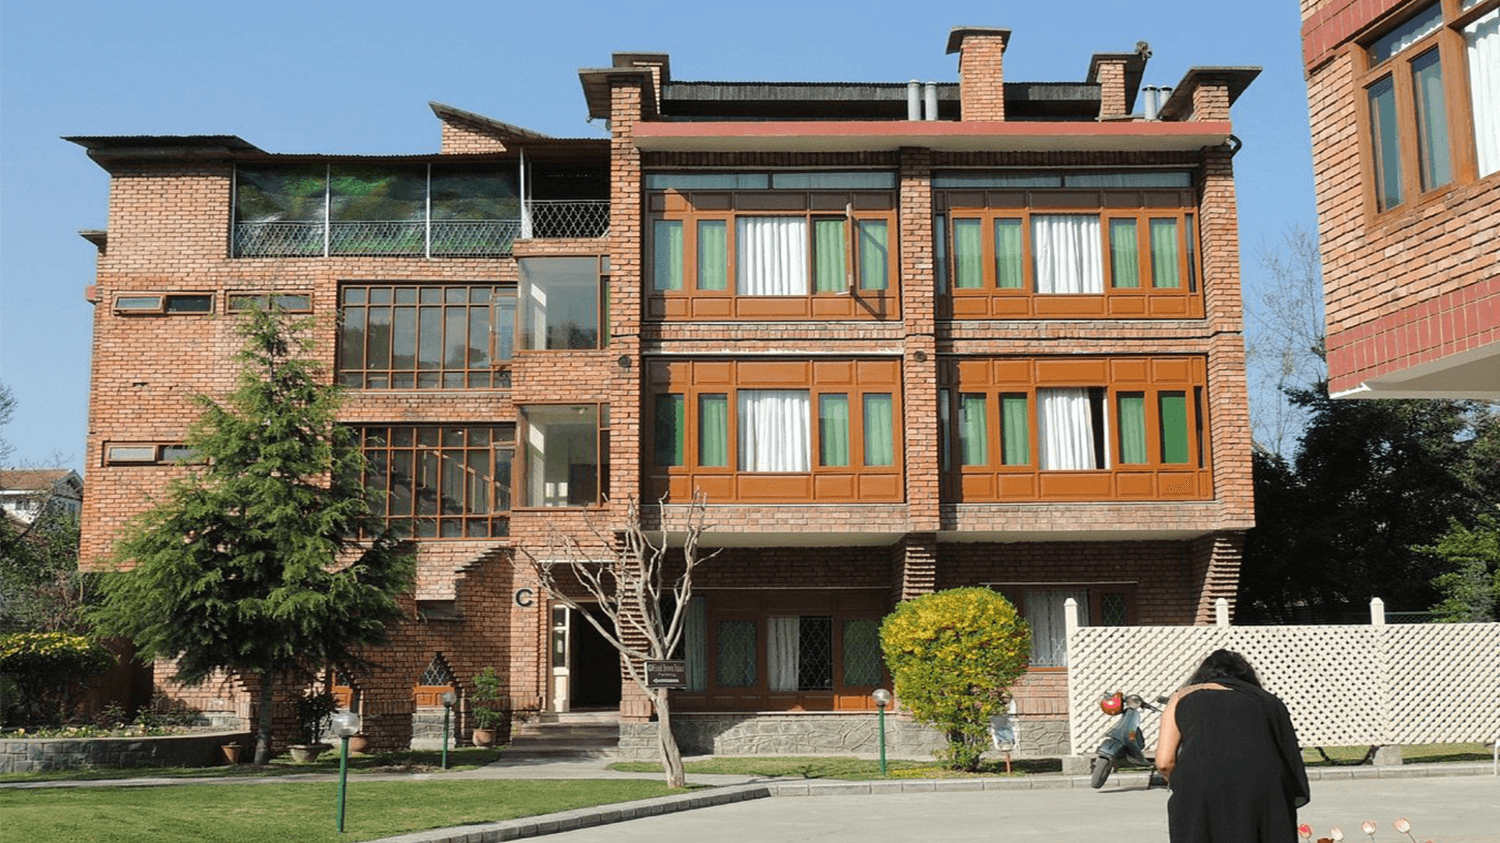 Brown Palace, Srinagar, Jammu and Kashmir, India